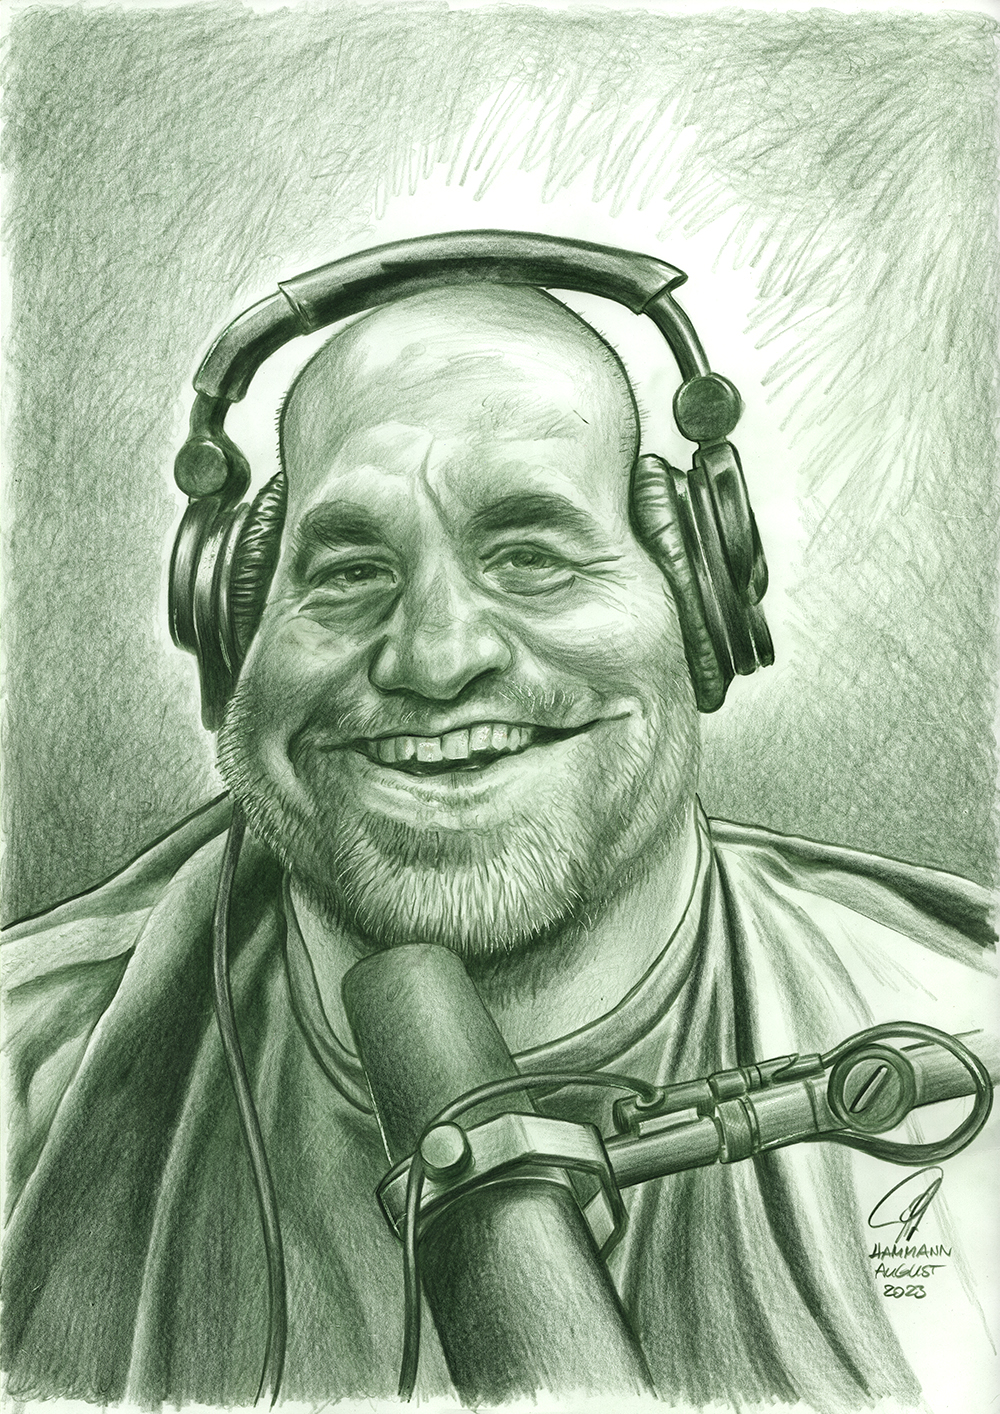 Buntstift-Zeichnung von Joe Rogan/ballpen drawing of Joe Rogan